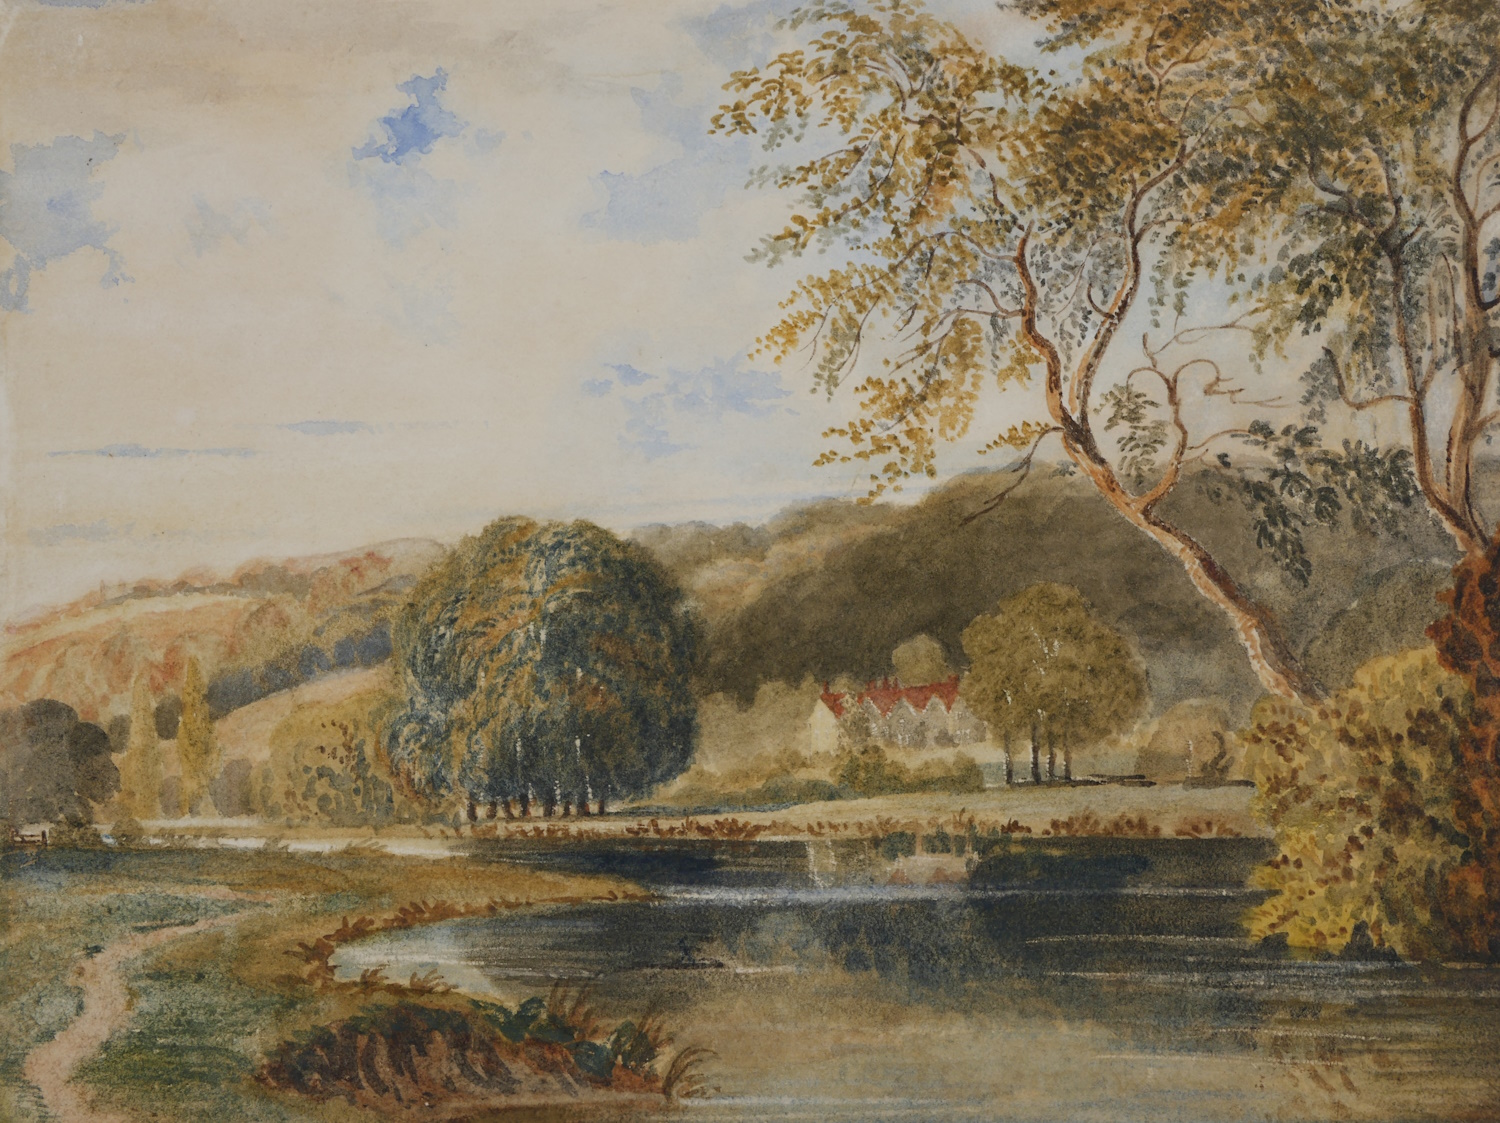 British School (Oxford, 1837) – Hardwick House, the Seat of Philip Lybbe Powys Esq